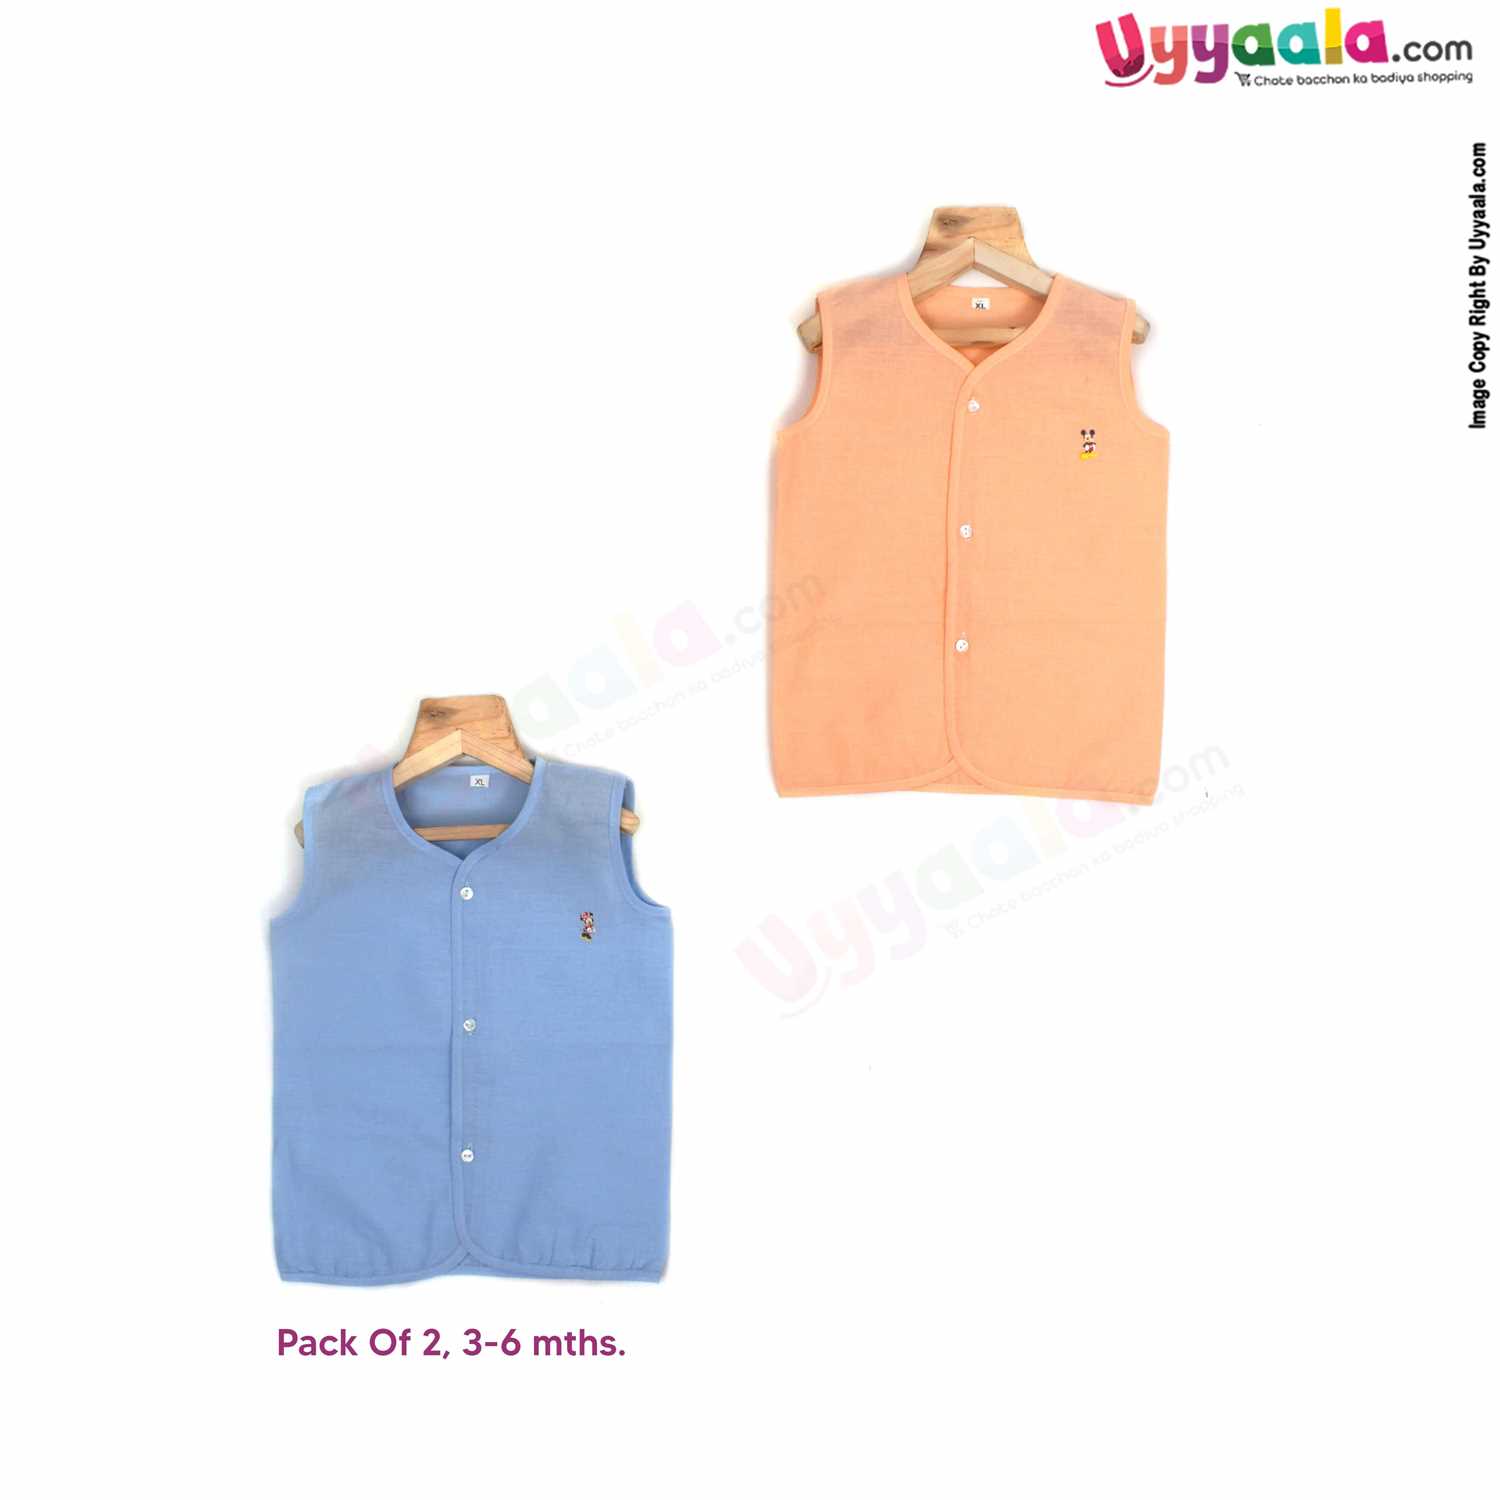 POLAR CUBS Sleeveless Baby Jabla Set, Front Opening Button Model, Premium Quality Cotton Baby Wear, (3-6M), 2Pack - Orange & Blue